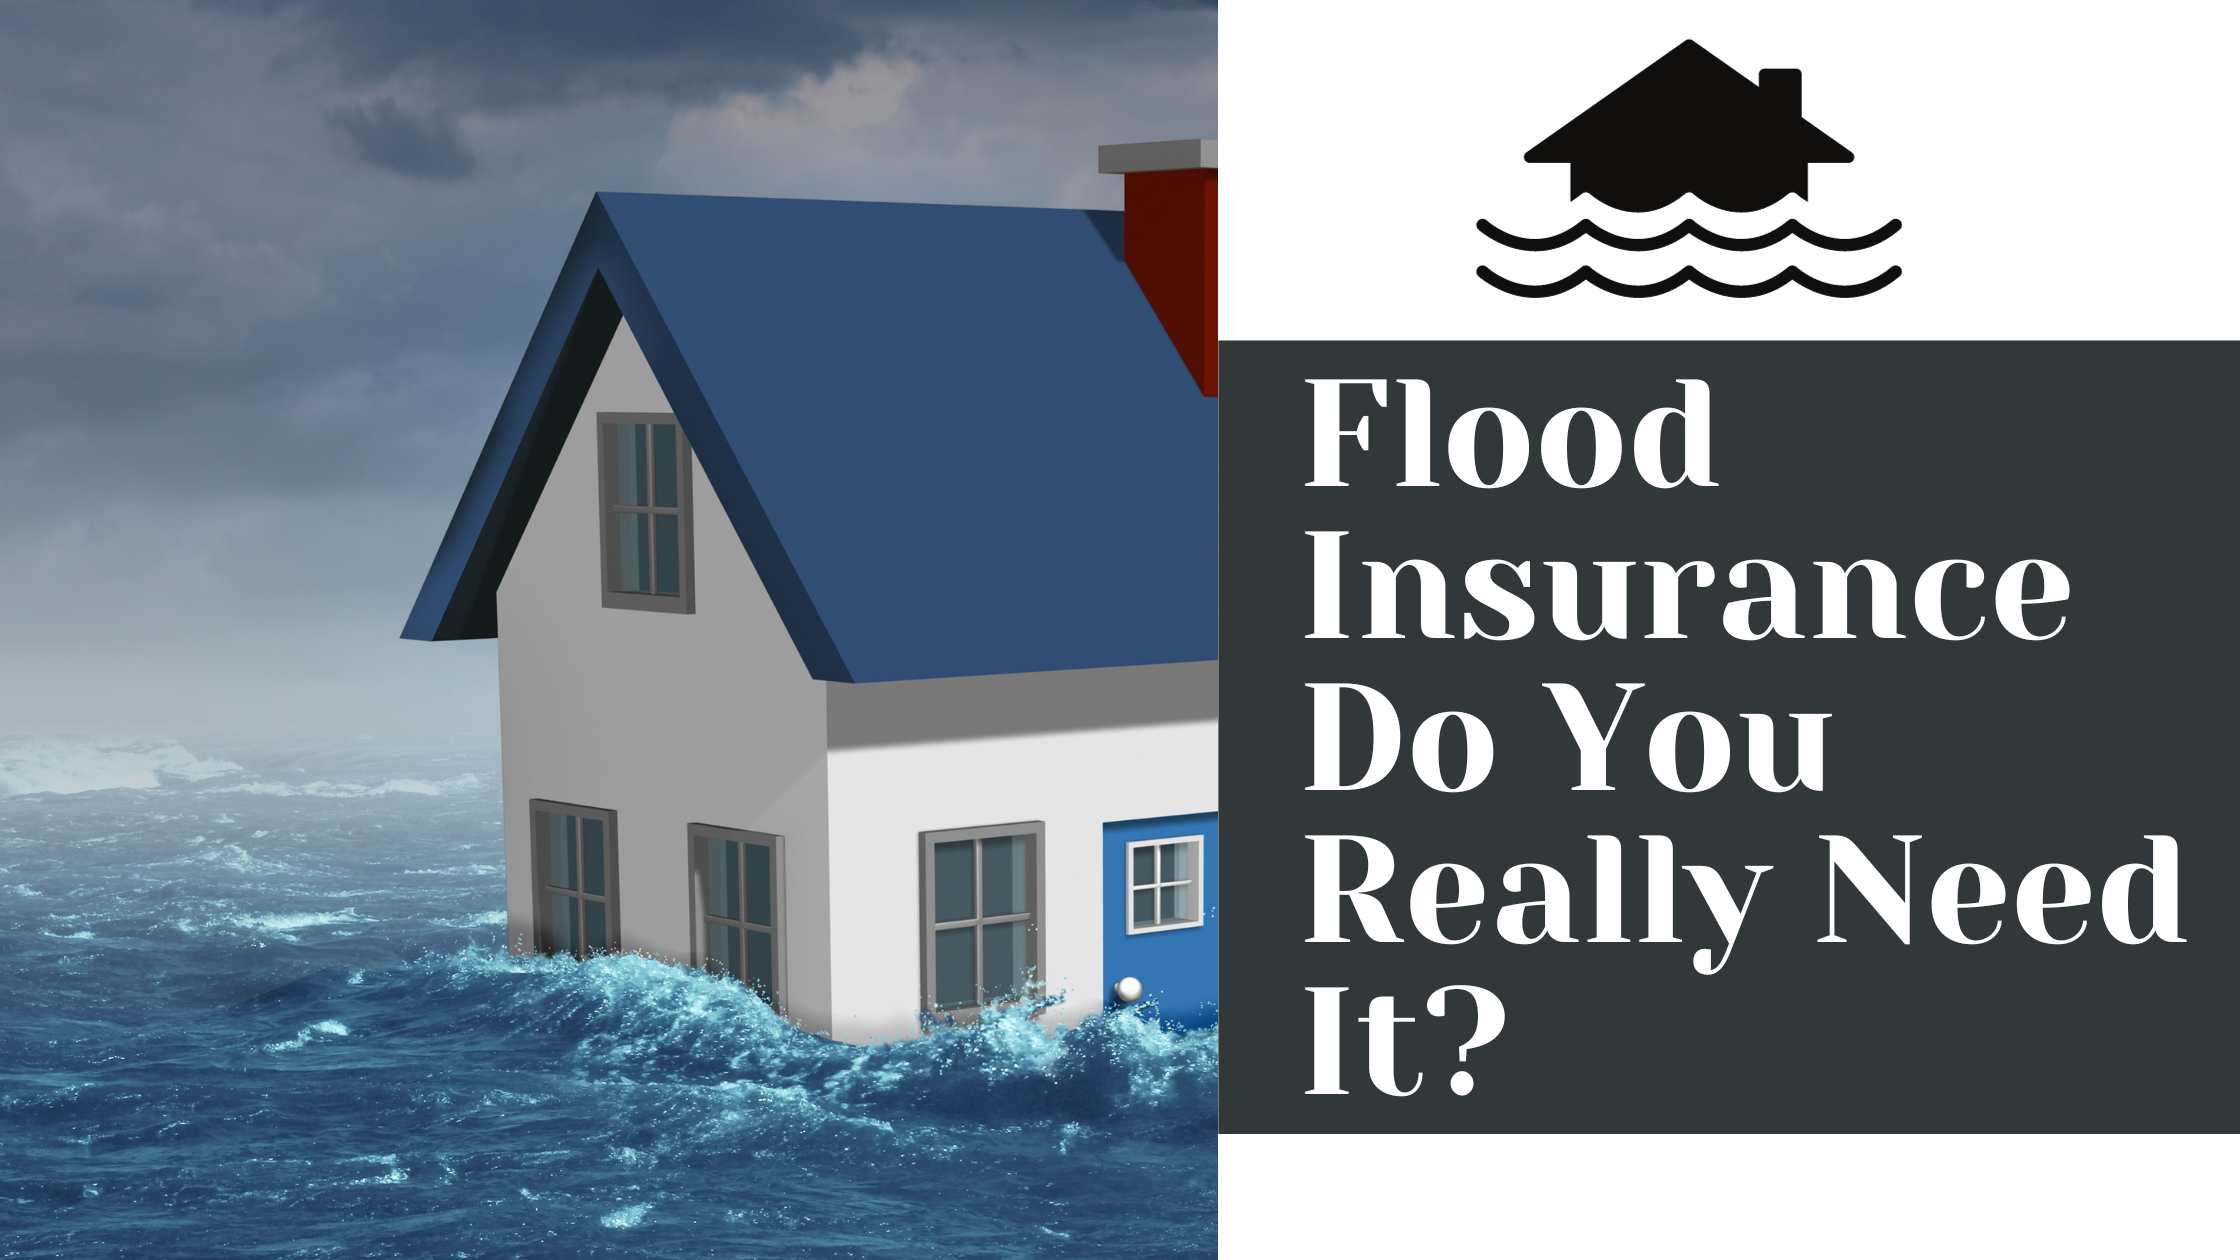 Flood Insurance: Do You Really Need It?